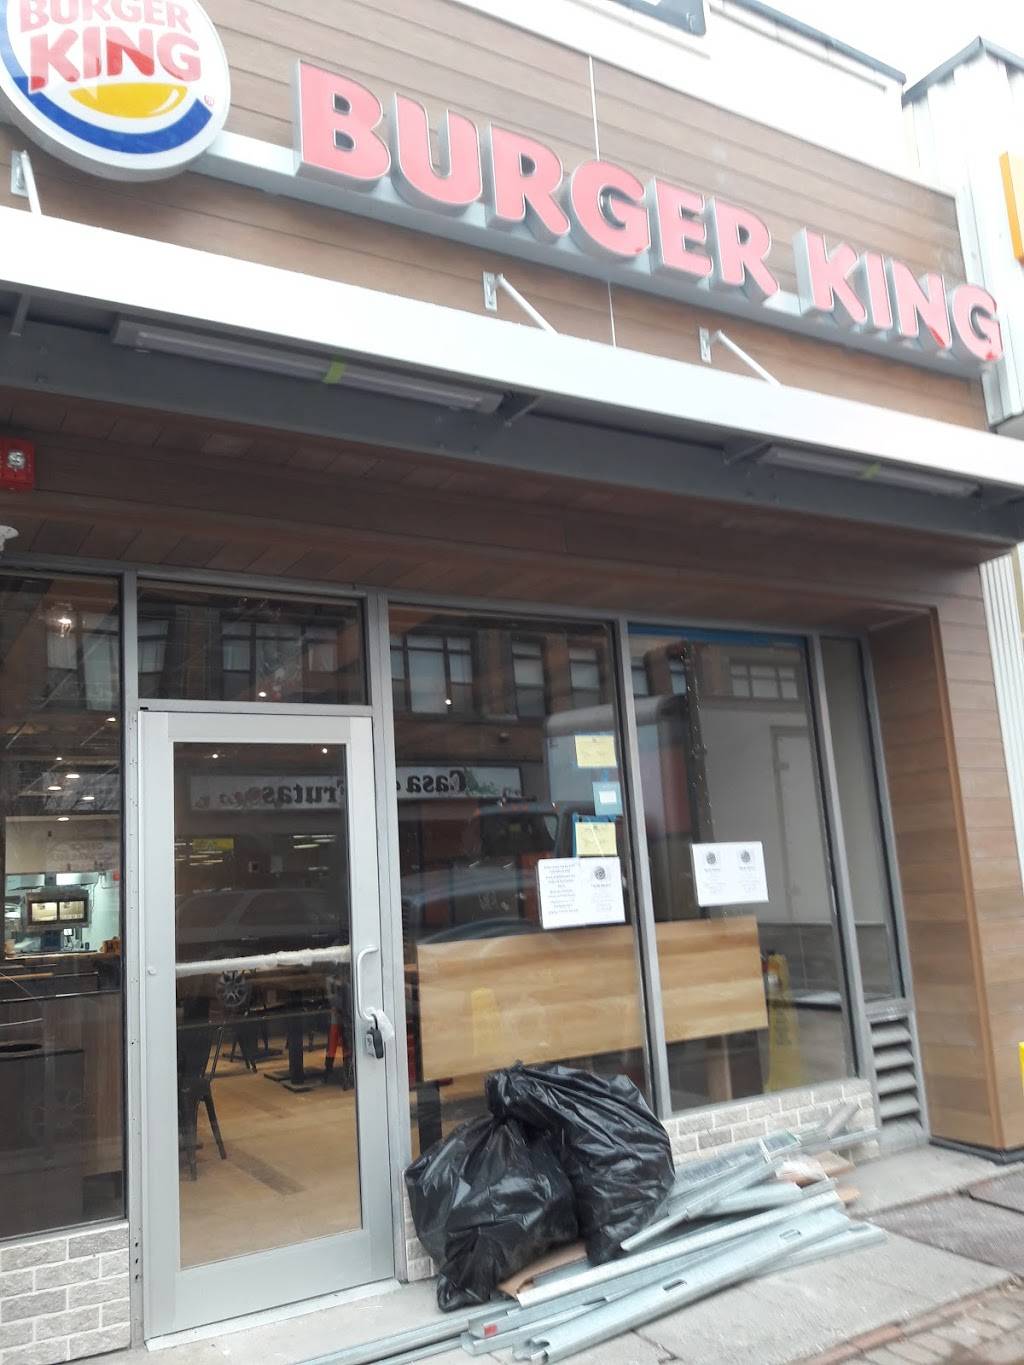 Burger King | restaurant | 182 Smith St, Perth Amboy, NJ 08861, USA | 8663942493 OR +1 866-394-2493